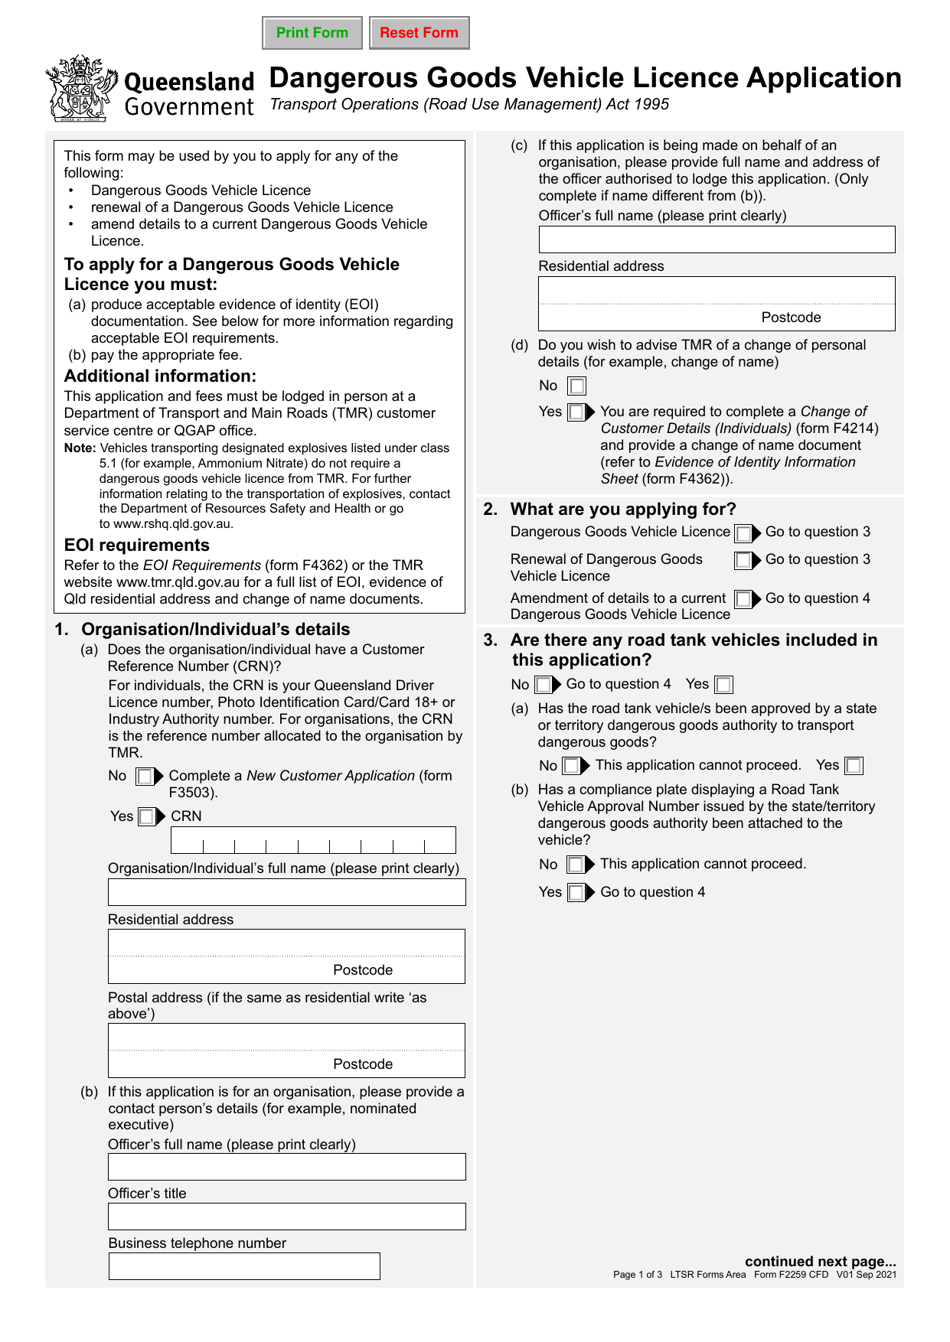 Form F2259 Dangerous Goods Vehicle Licence Application - Queensland, Australia, Page 1